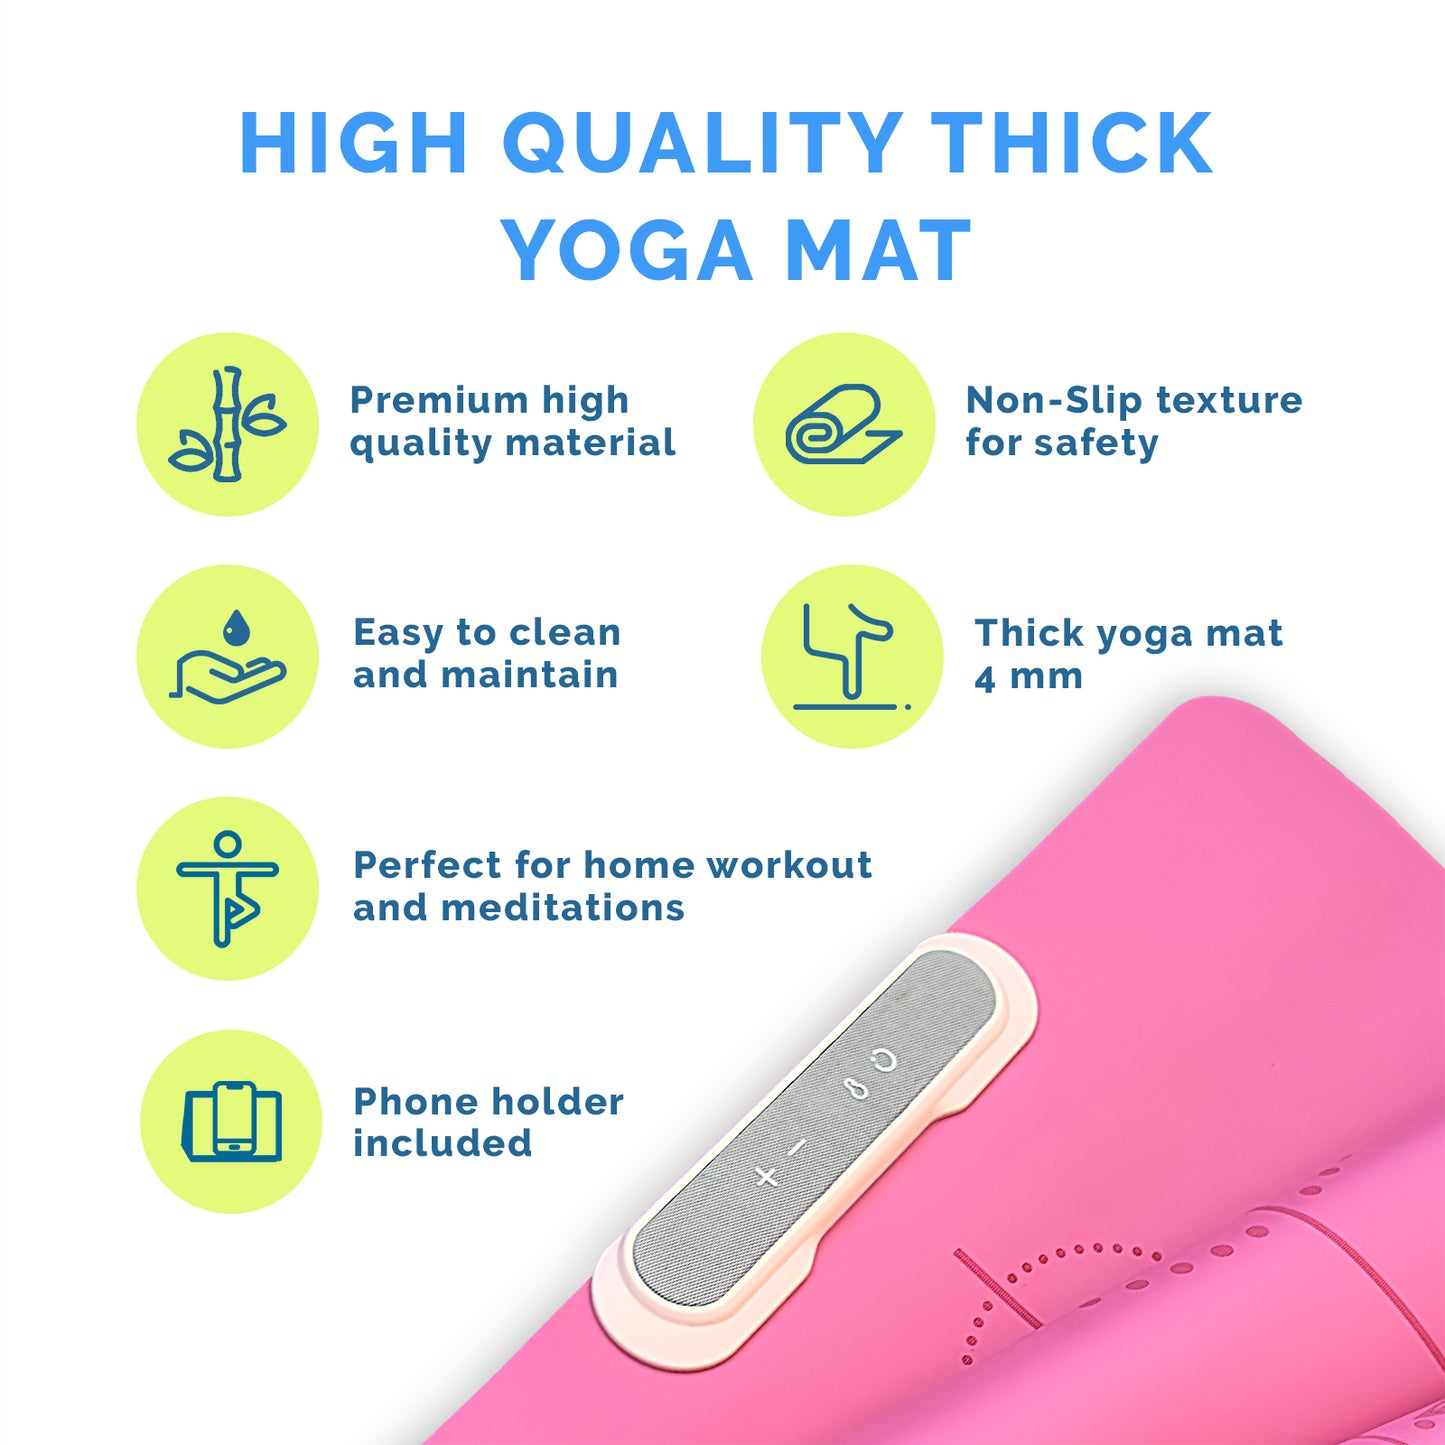 COOLU Innovative Yoga Mat